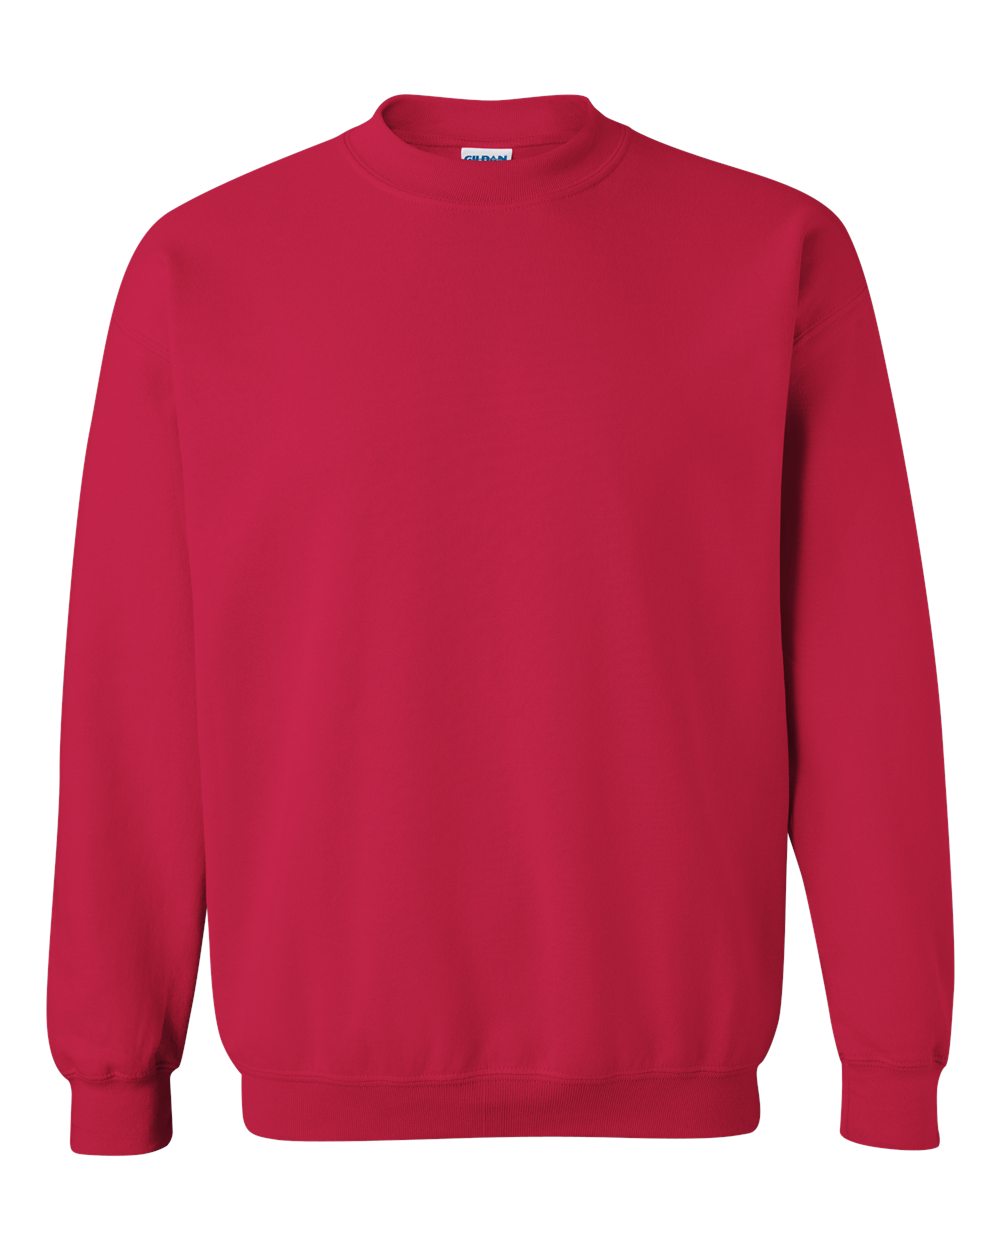 Gildan 18000 Heavy Blend Adult Sweatshirt - Cherry Red